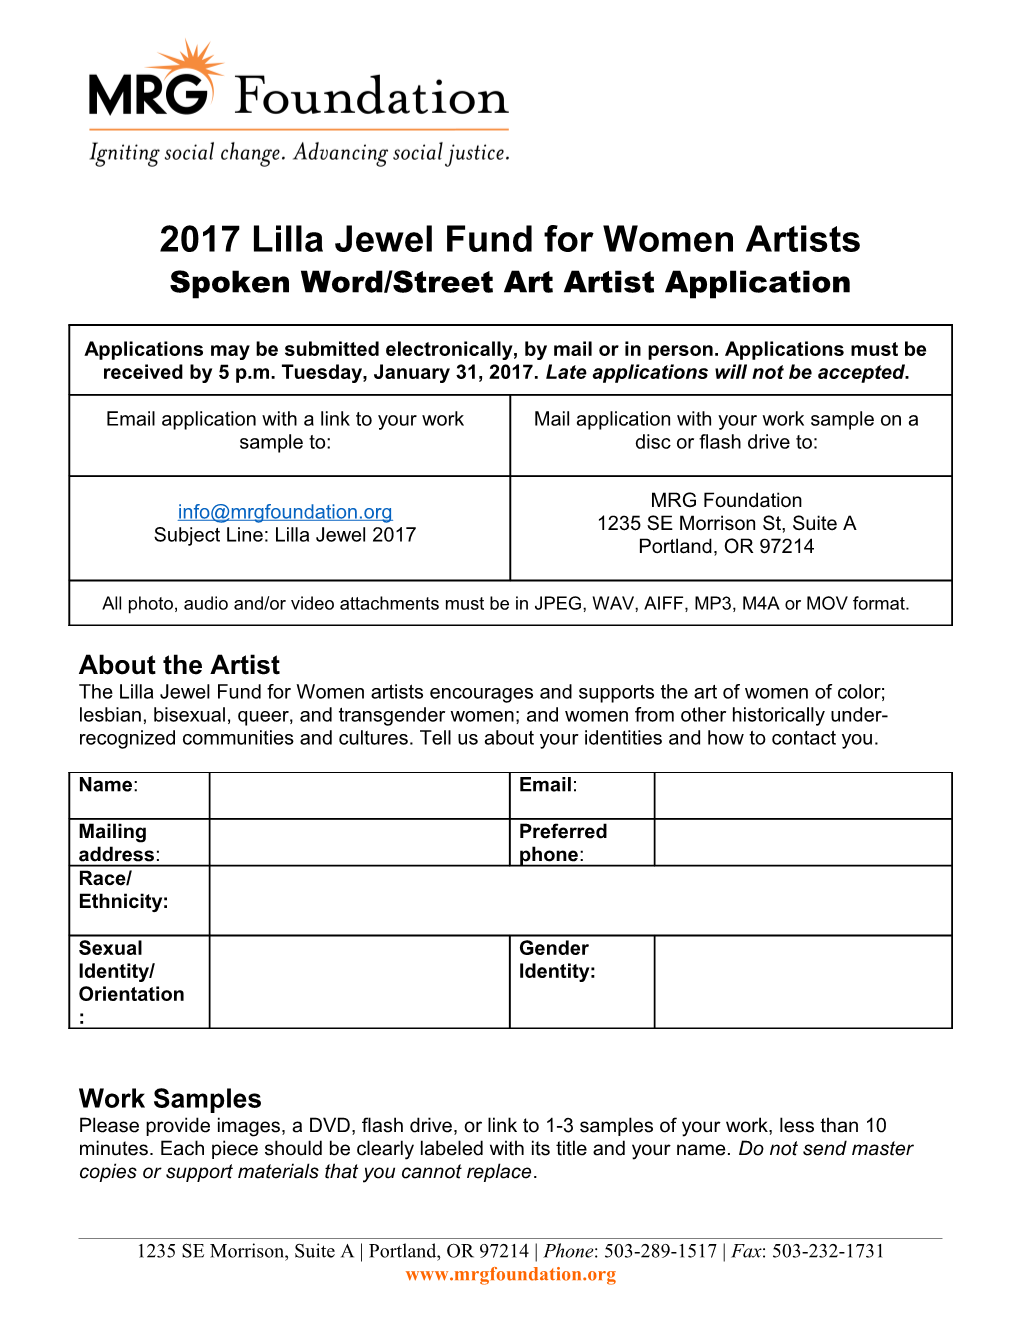 2017 Lilla Jewel Fund for Women Artists Spoken Word/Street Art Artist Application